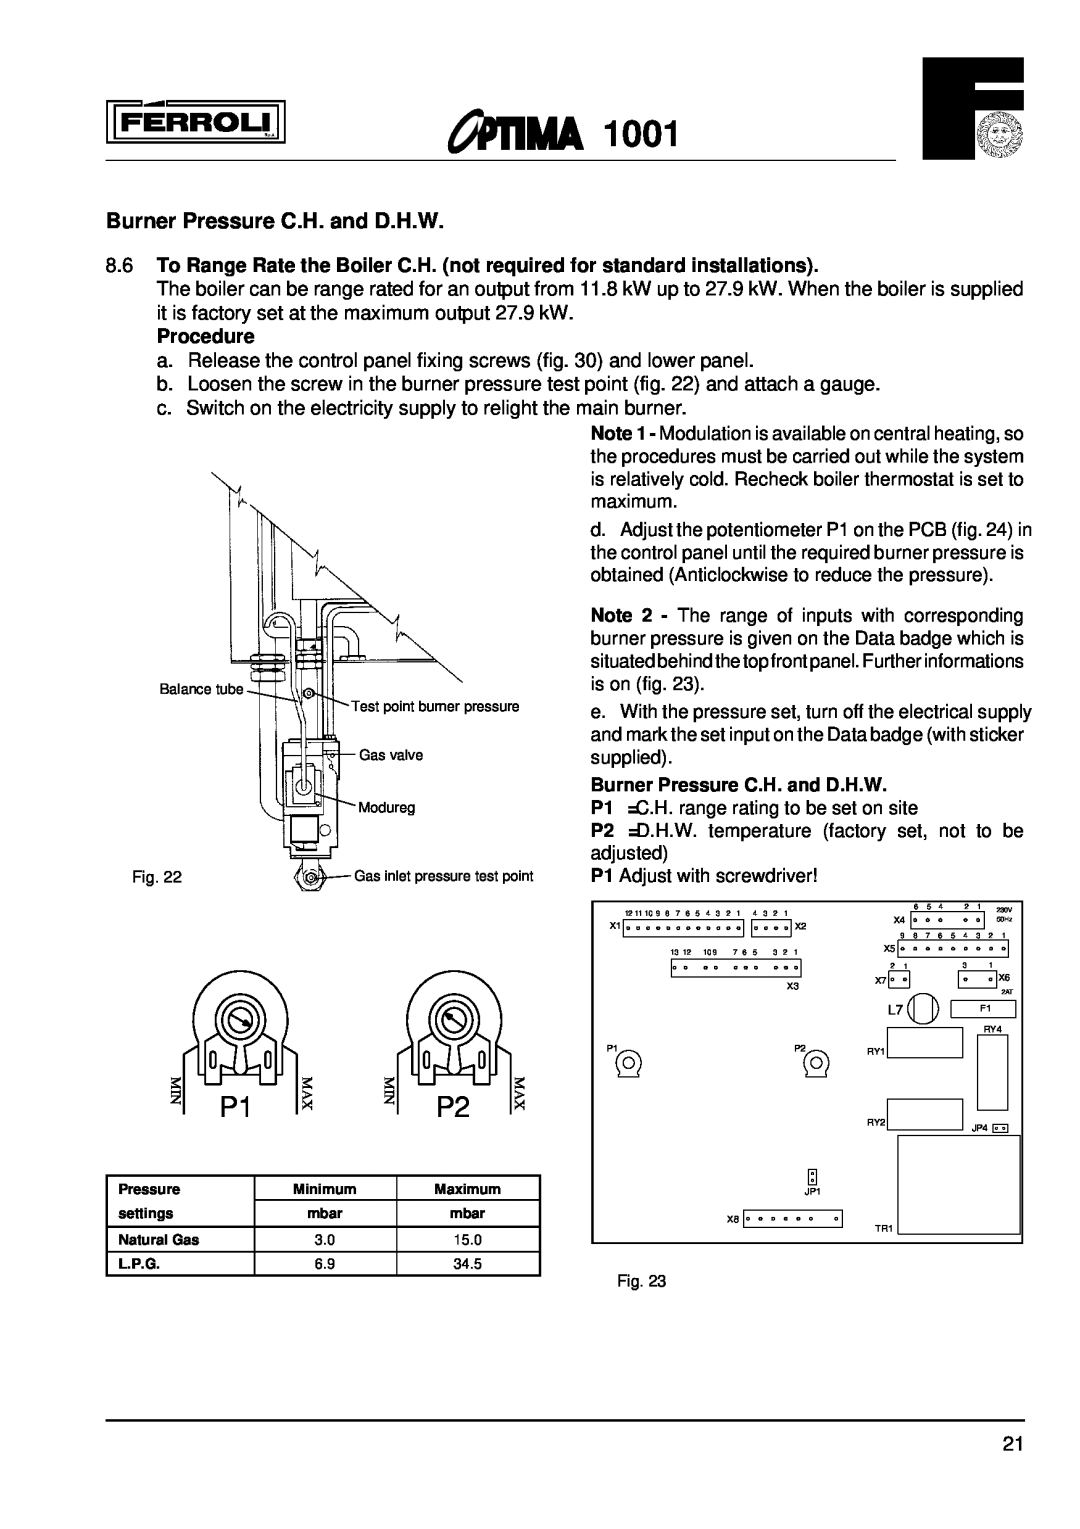 Optima Company 1001 installation instructions Burner Pressure C.H. and D.H.W, Procedure 